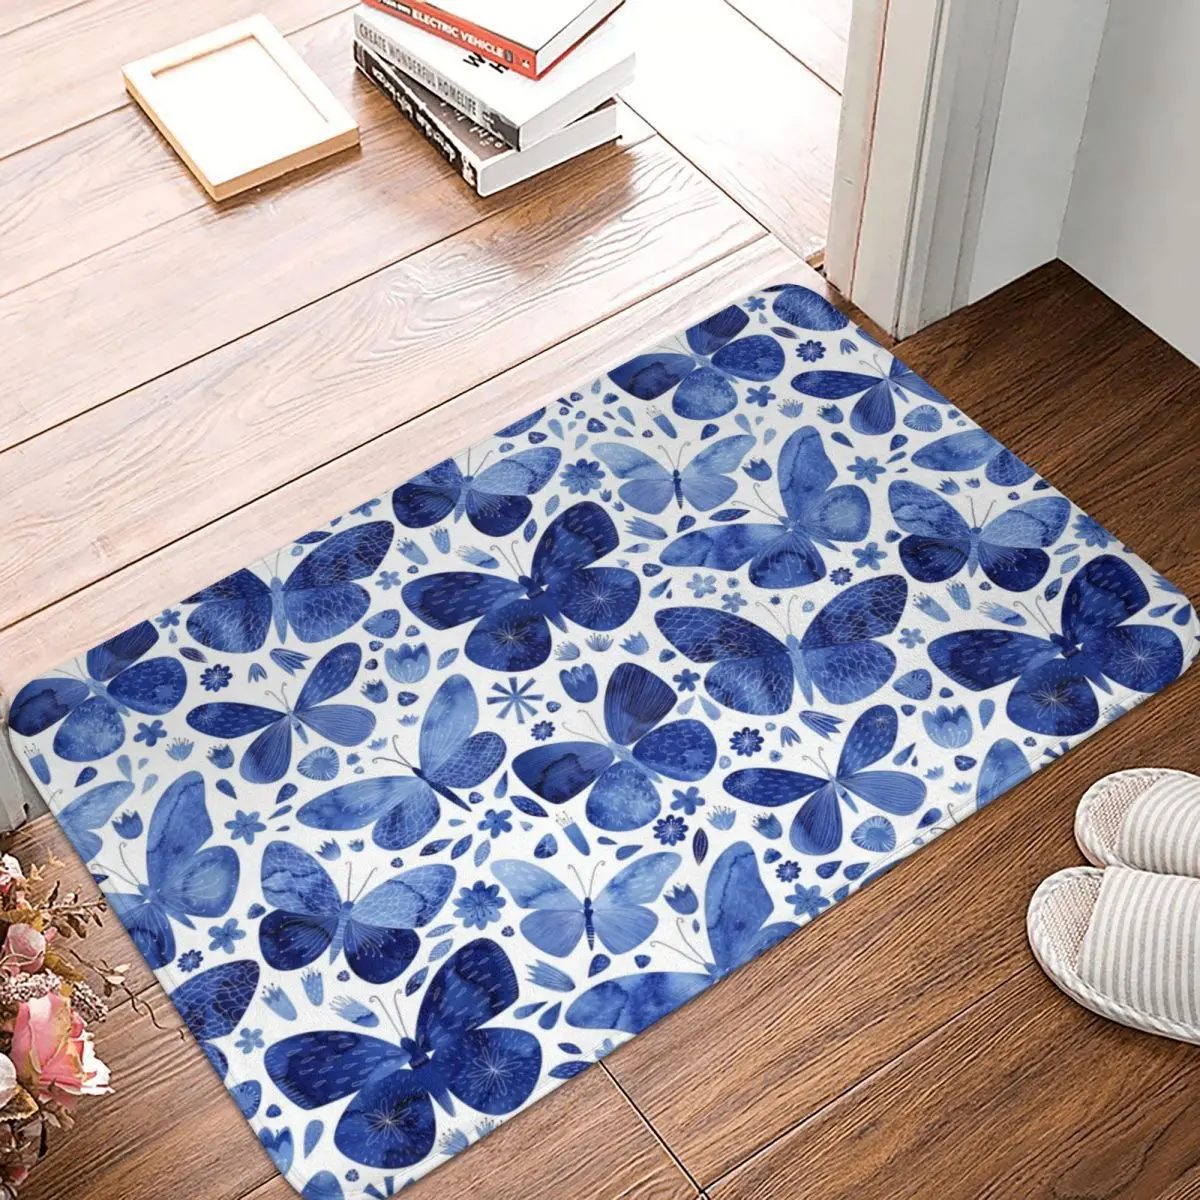 

Blue Butterflies Doormat Carpet Mat Rug Polyester PVC Non-Slip Floor Decor Bath Bathroom Kitchen Balcony 40*60